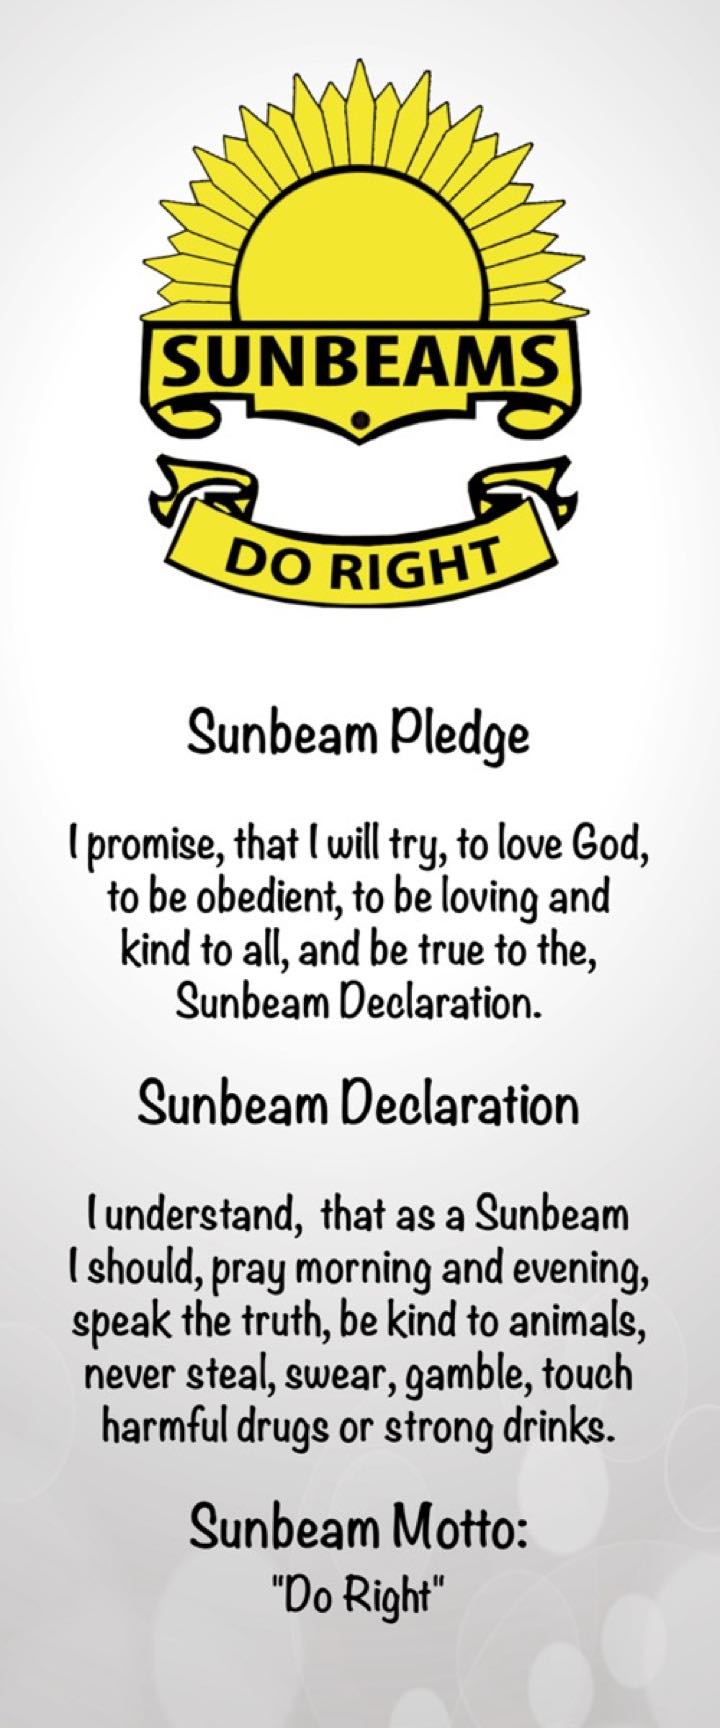 Sunbeams Pledge Poster